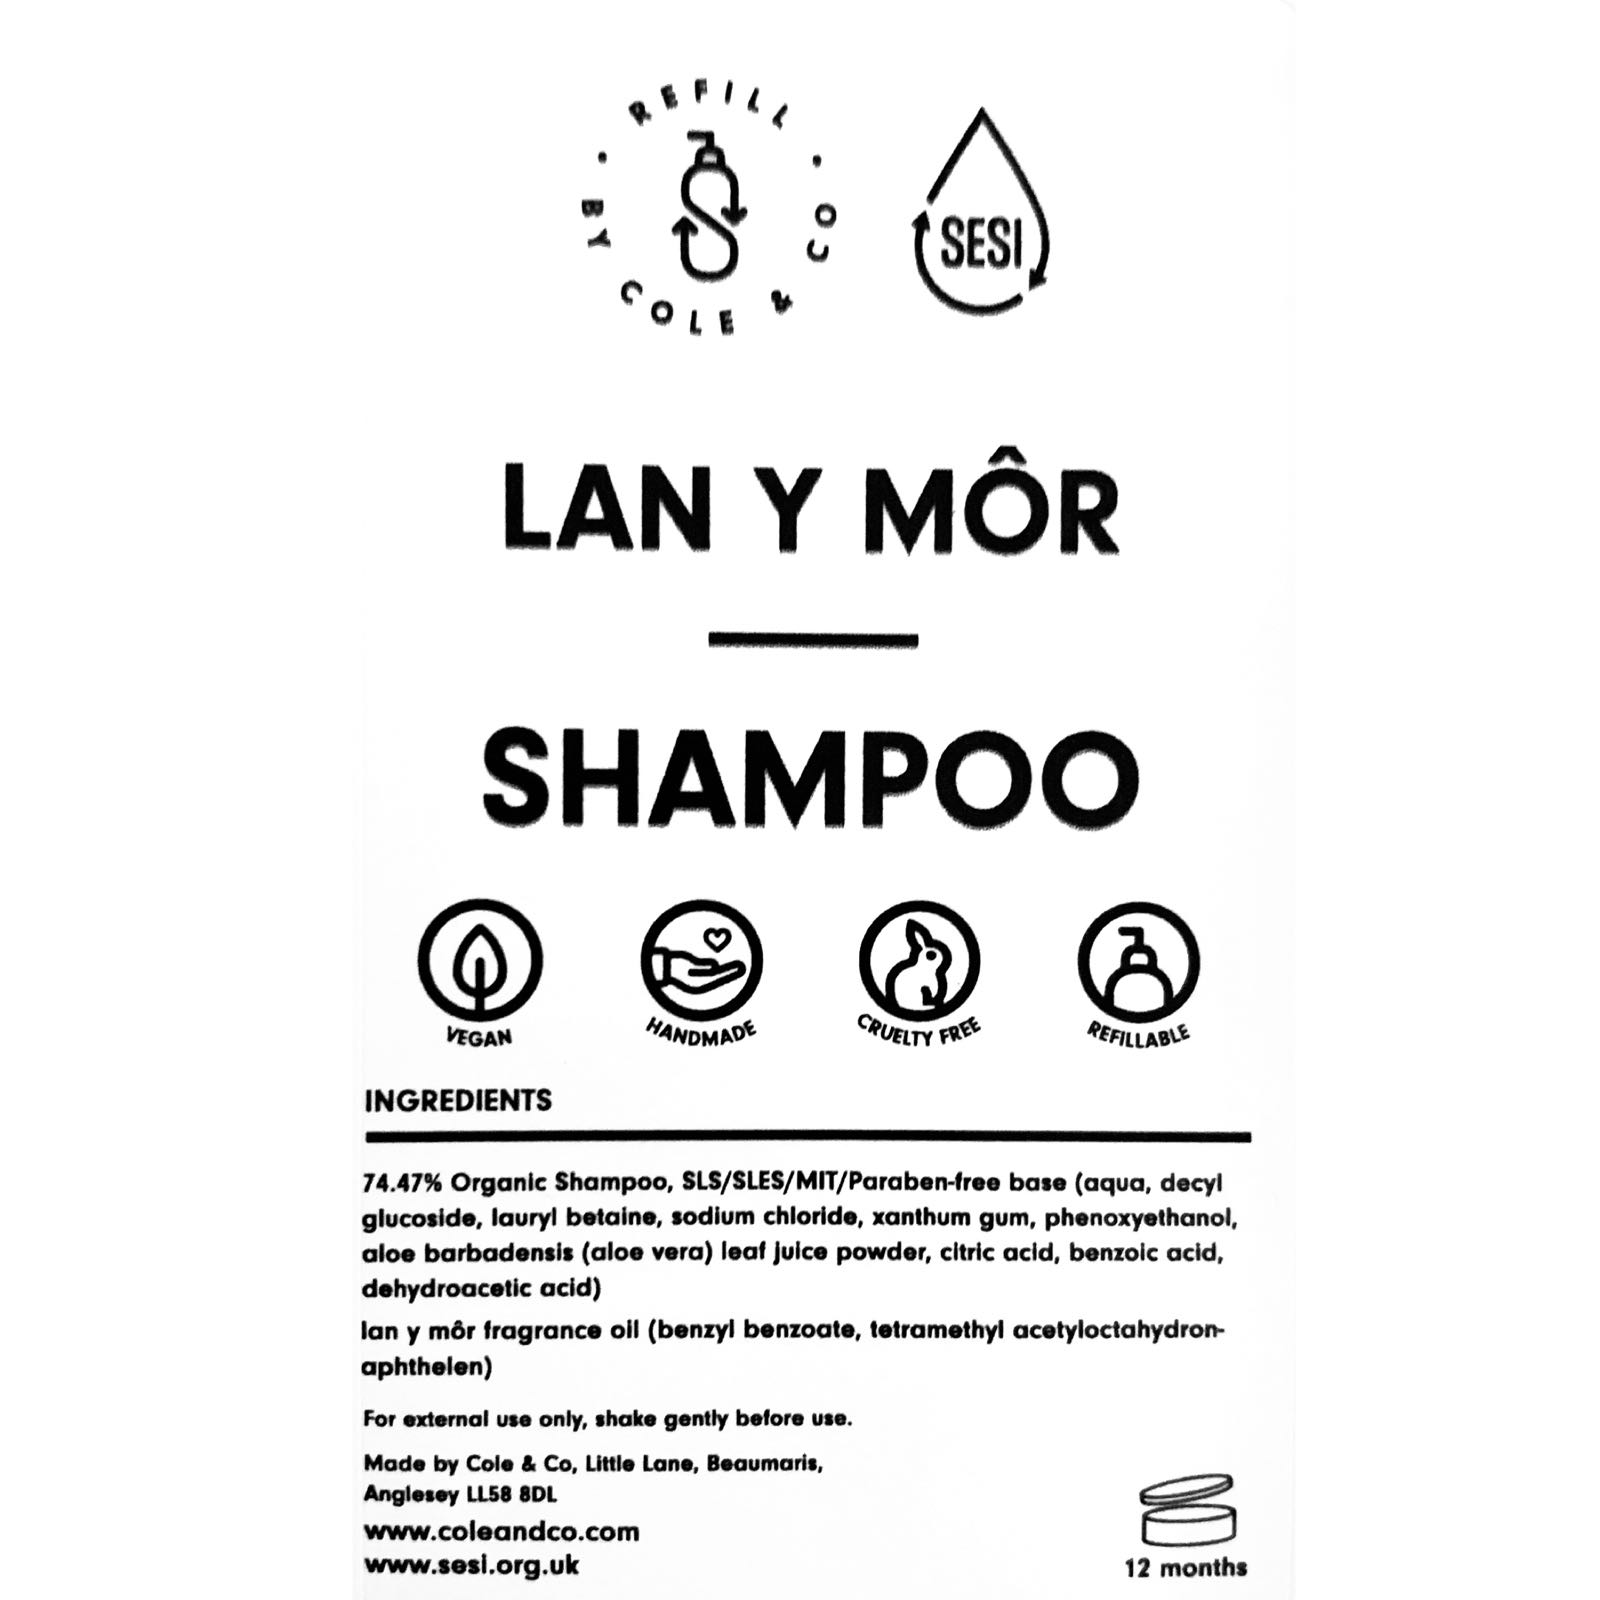 Shampoo in Lan y Môr | Cole & Co